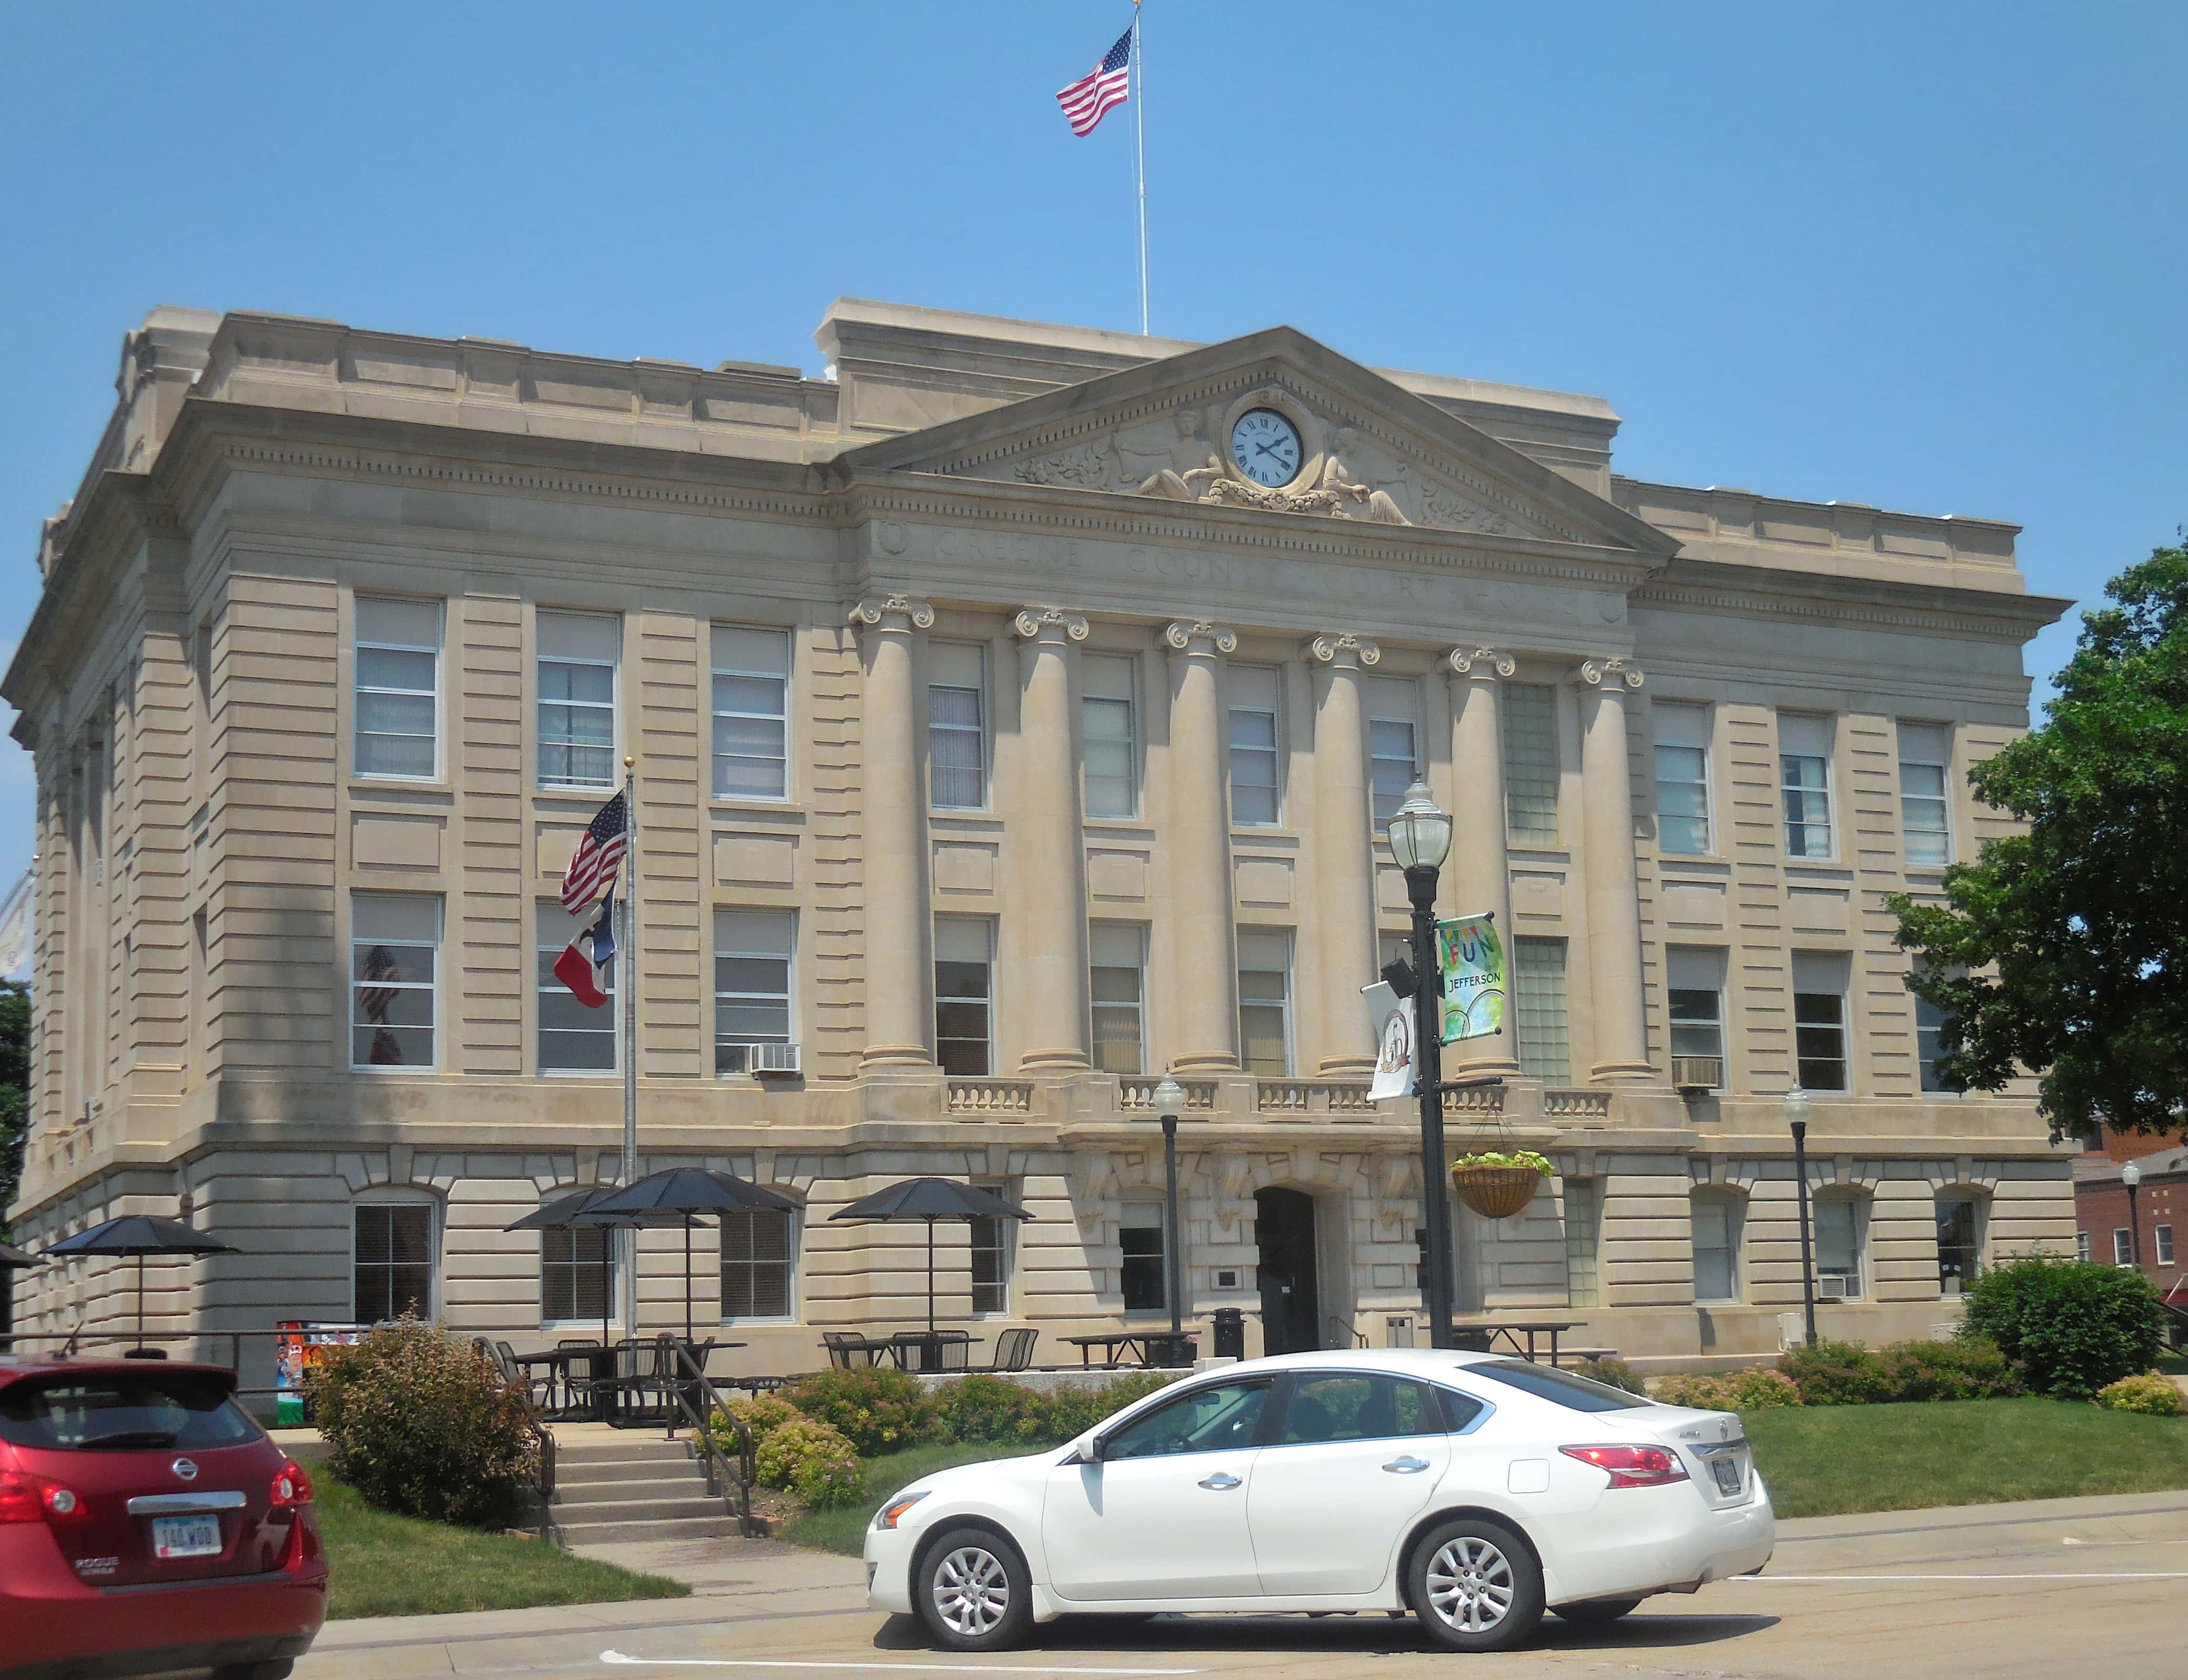 greene-county-courthouse-9